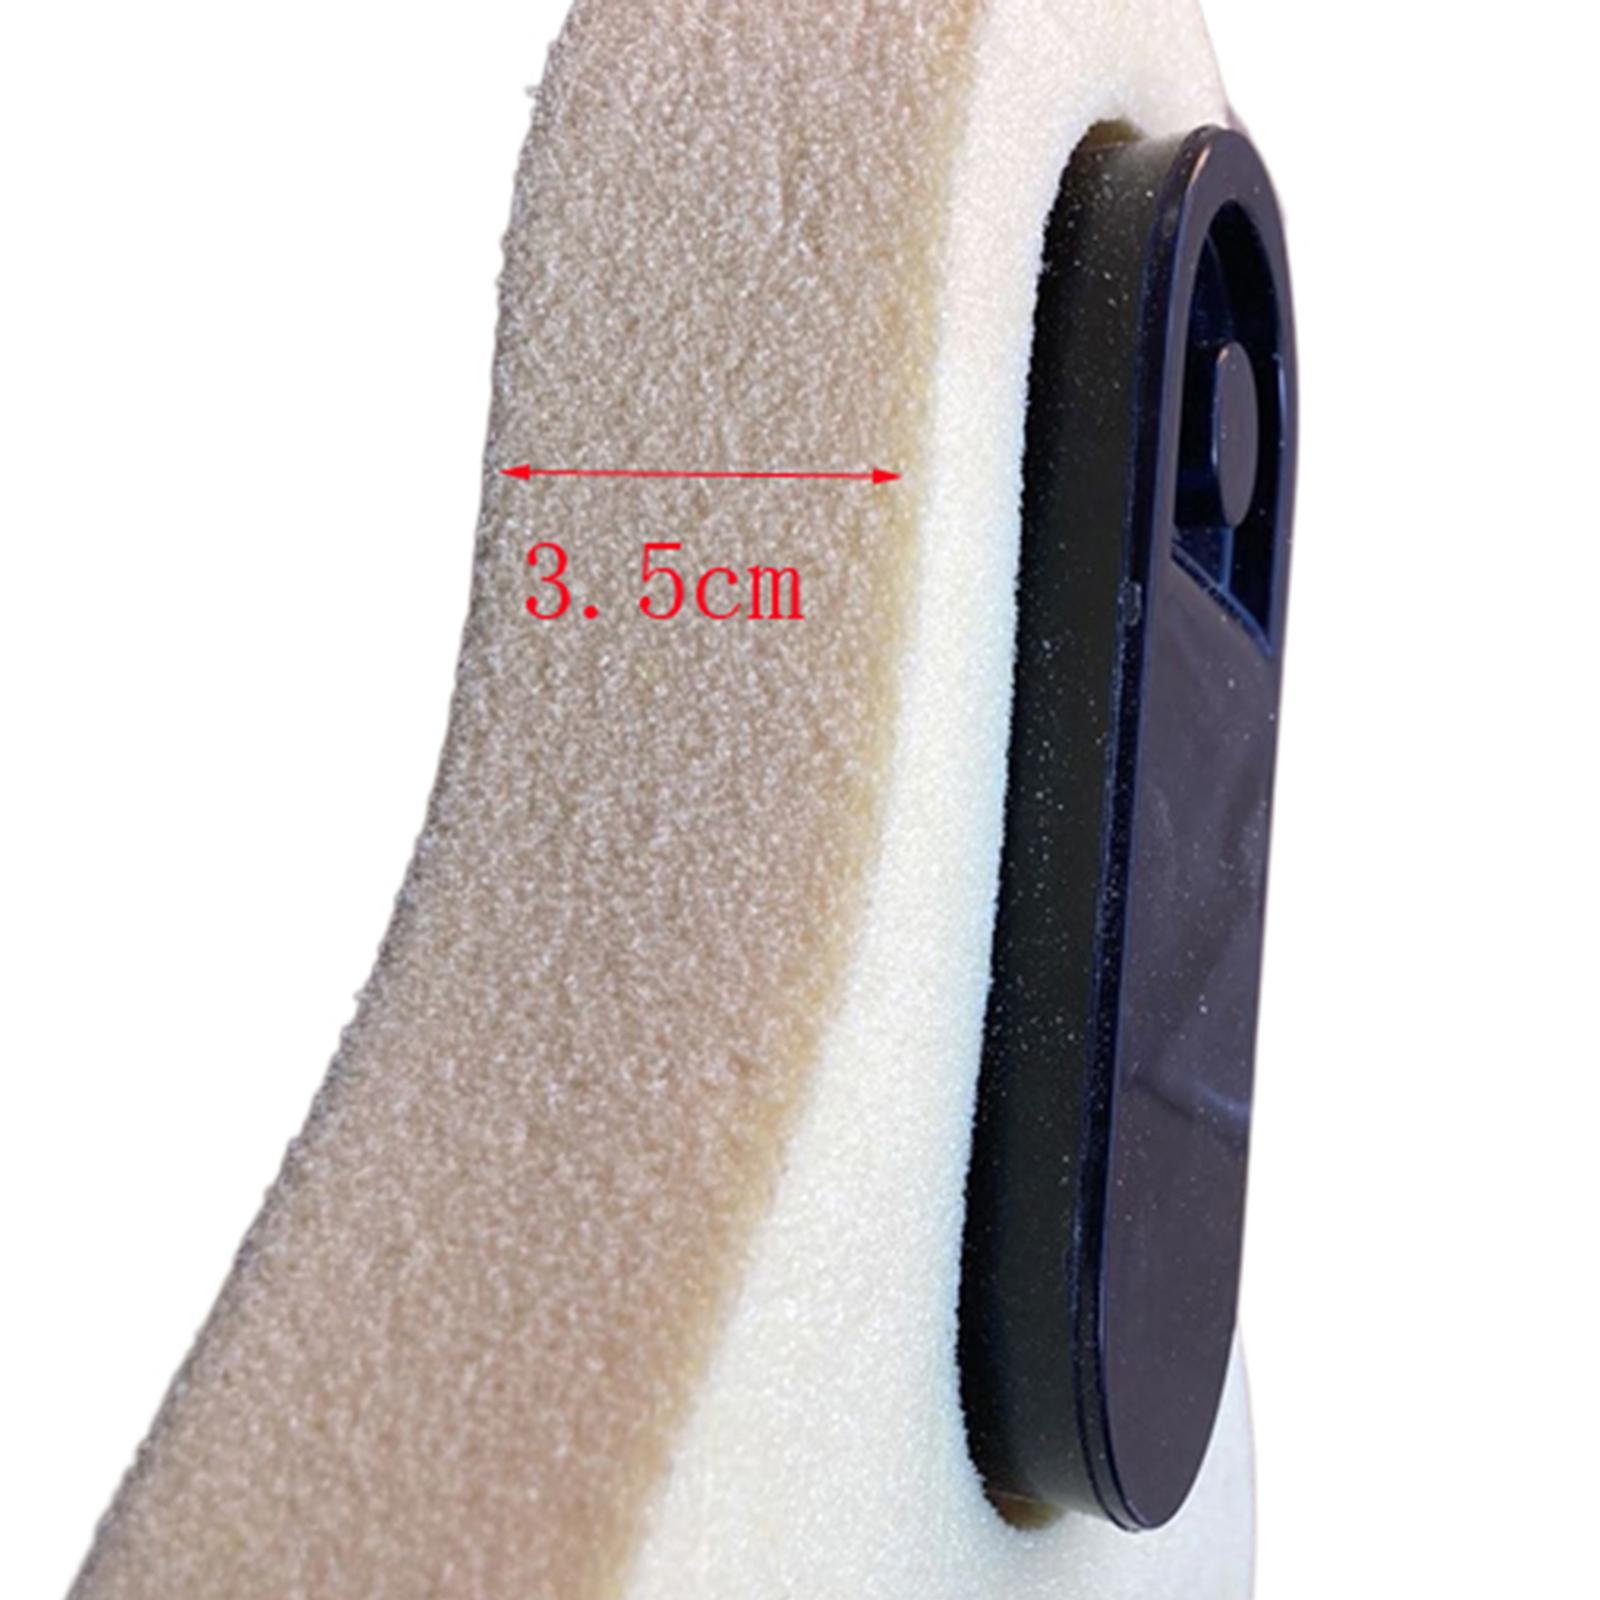 Surfboard  Tail Box 10 inch Black Foam PVC Handrail for Tail